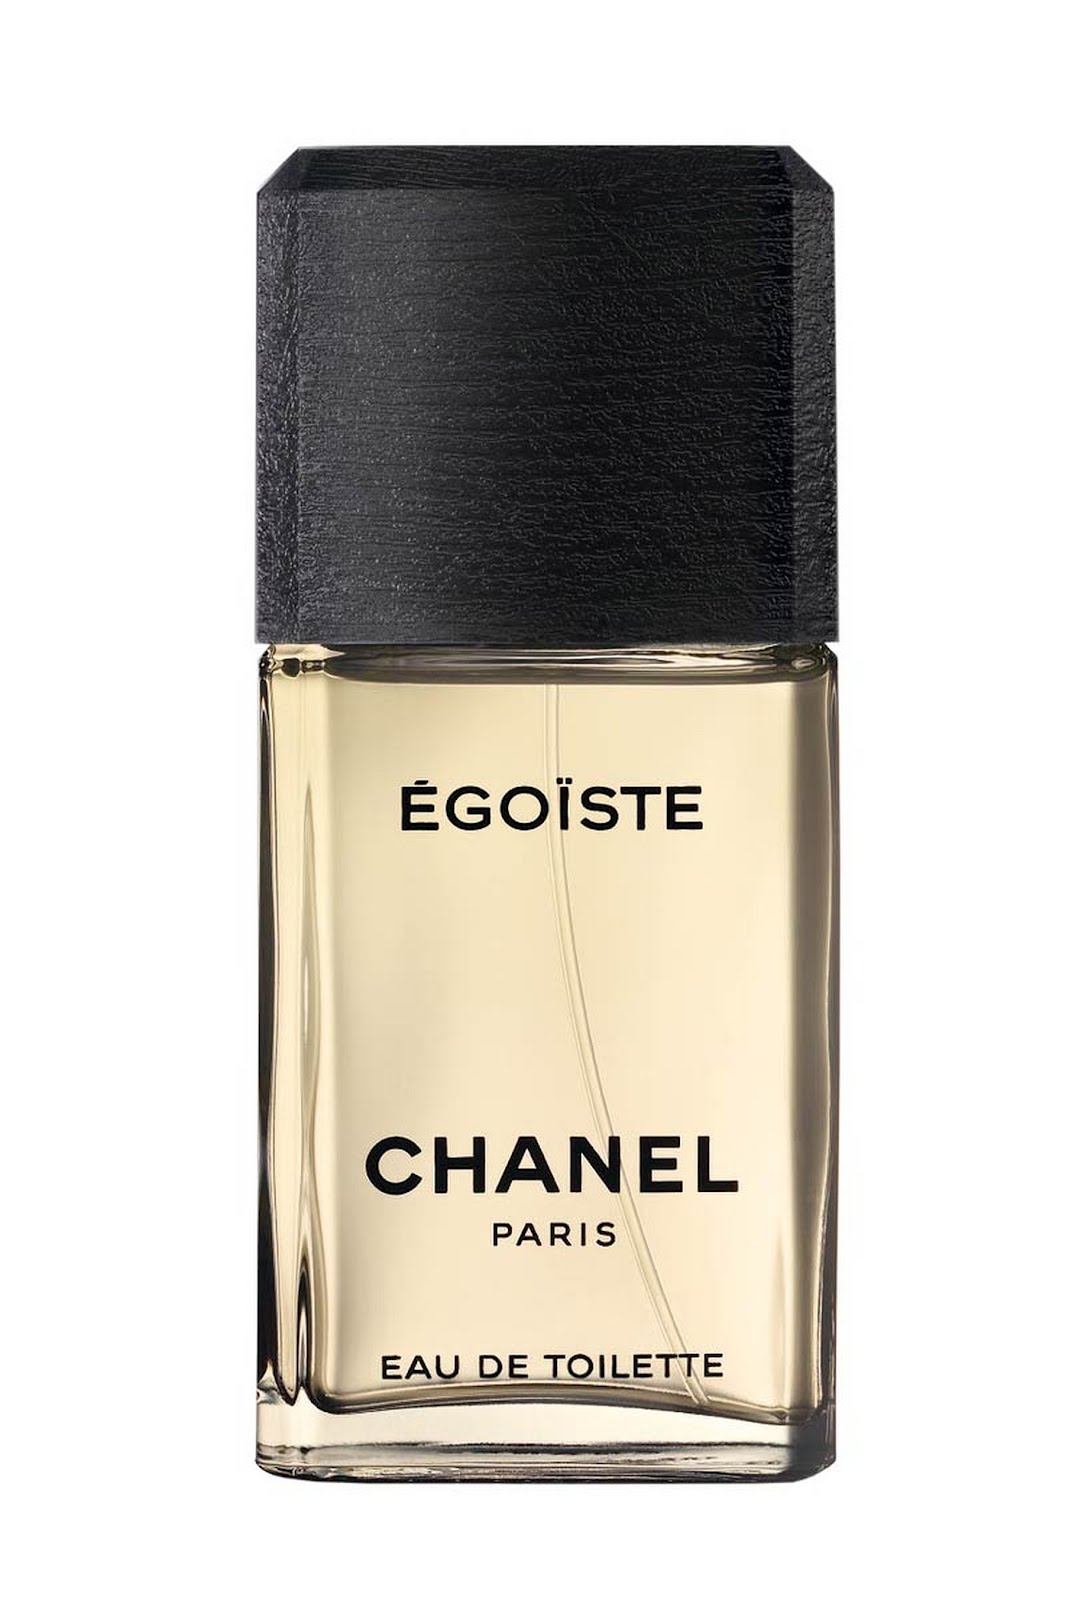 From Pyrgos: Égoïste (Chanel)